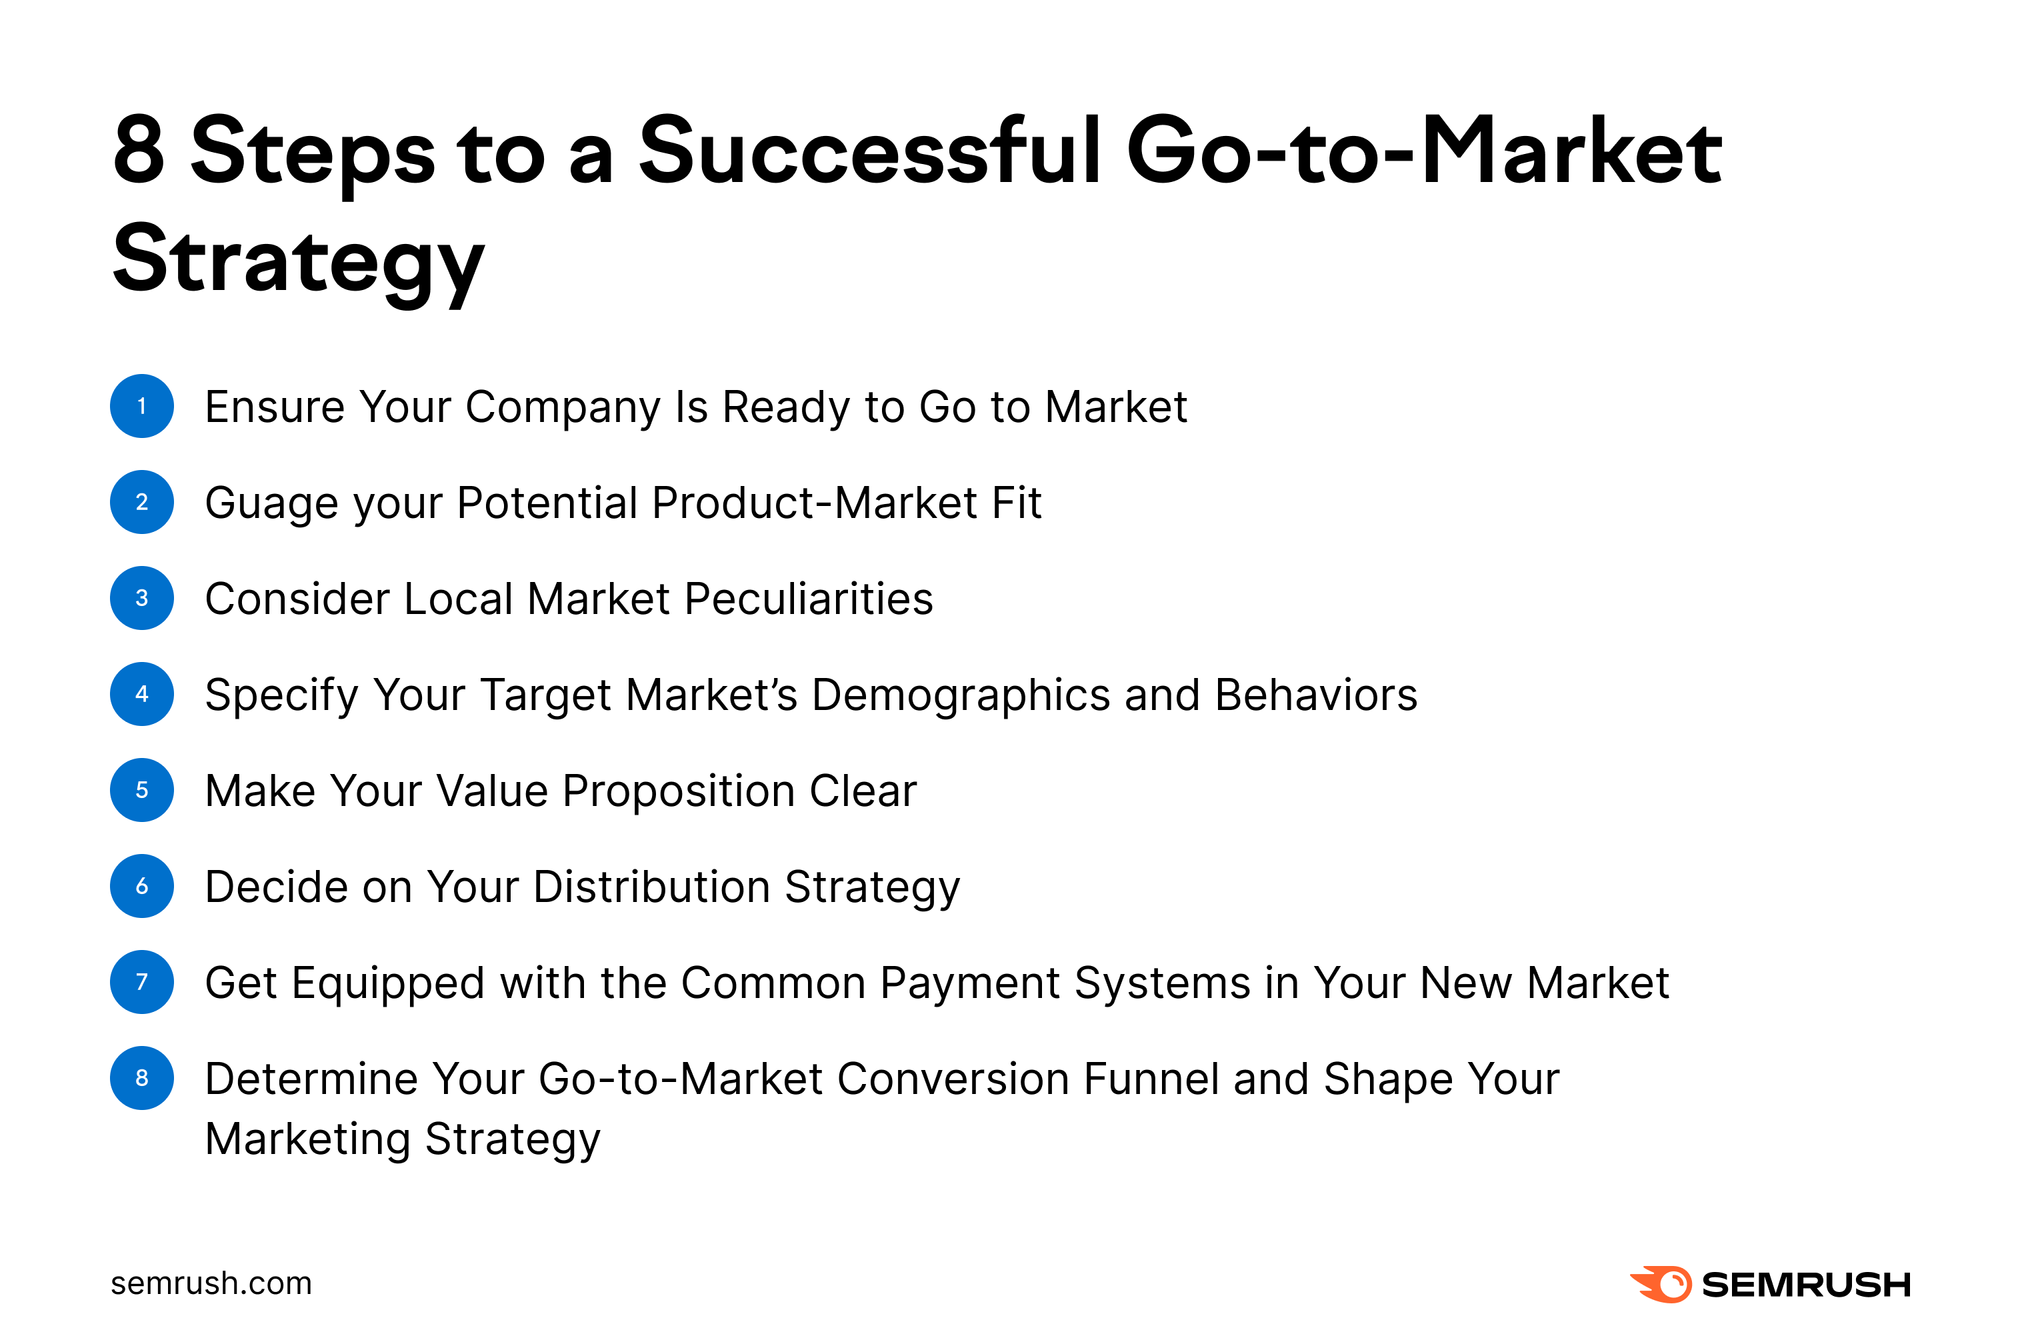 Go-to-market strategy checklist